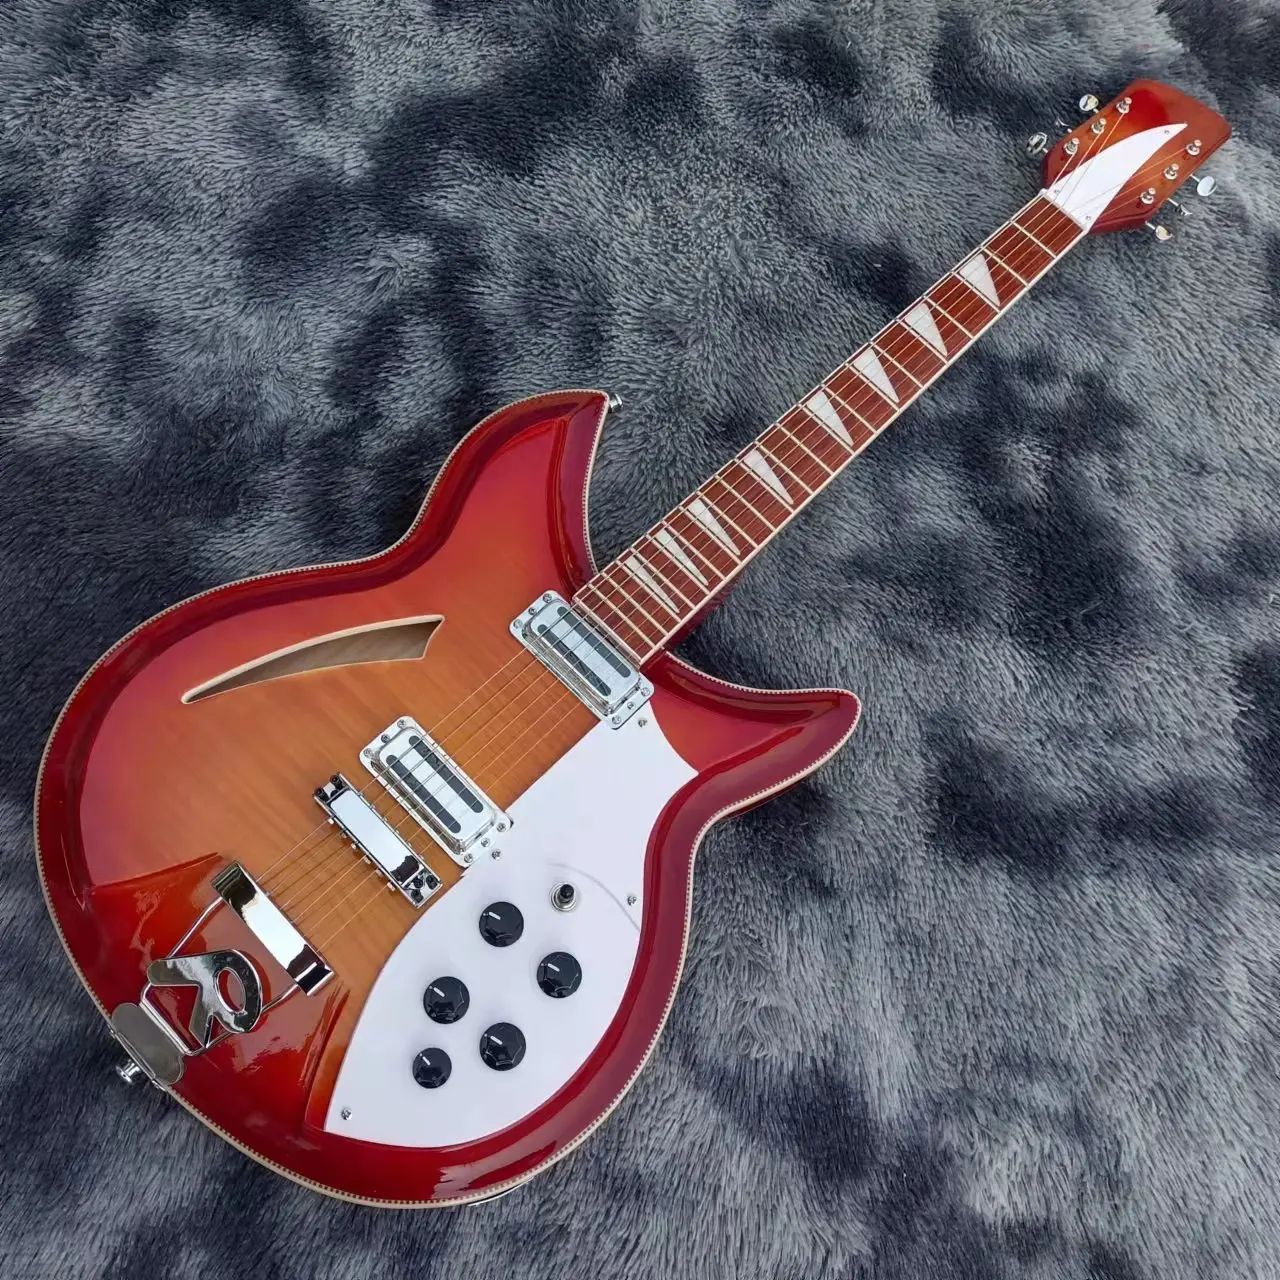 Color:6 string guitar